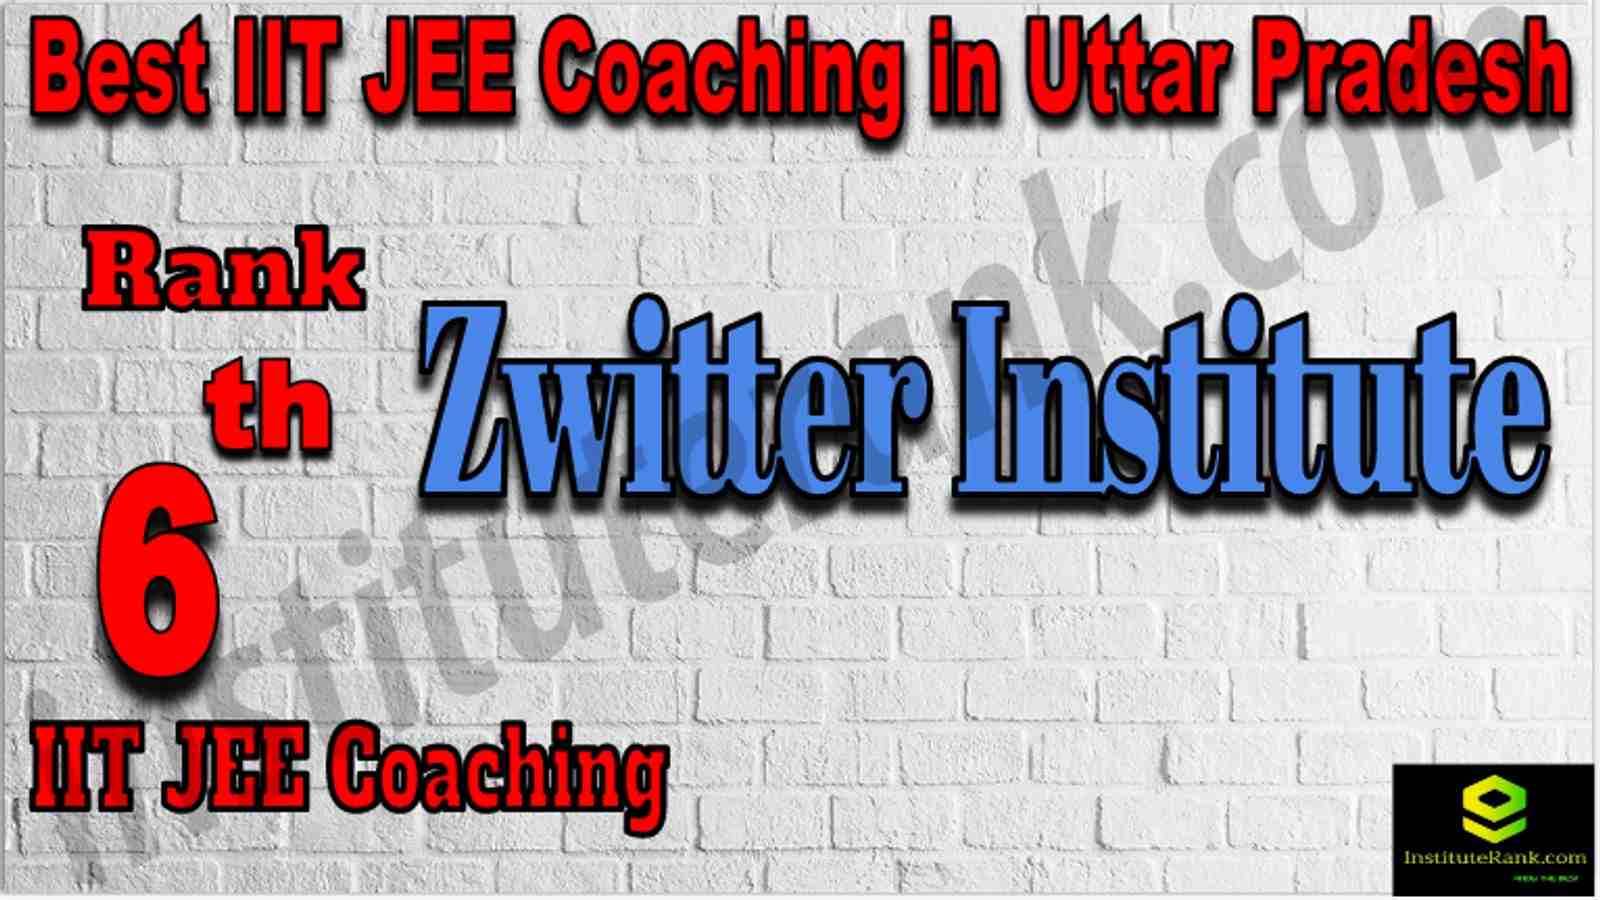 Rank 6th Best IIT JEE Coaching in Uttar Pradesh